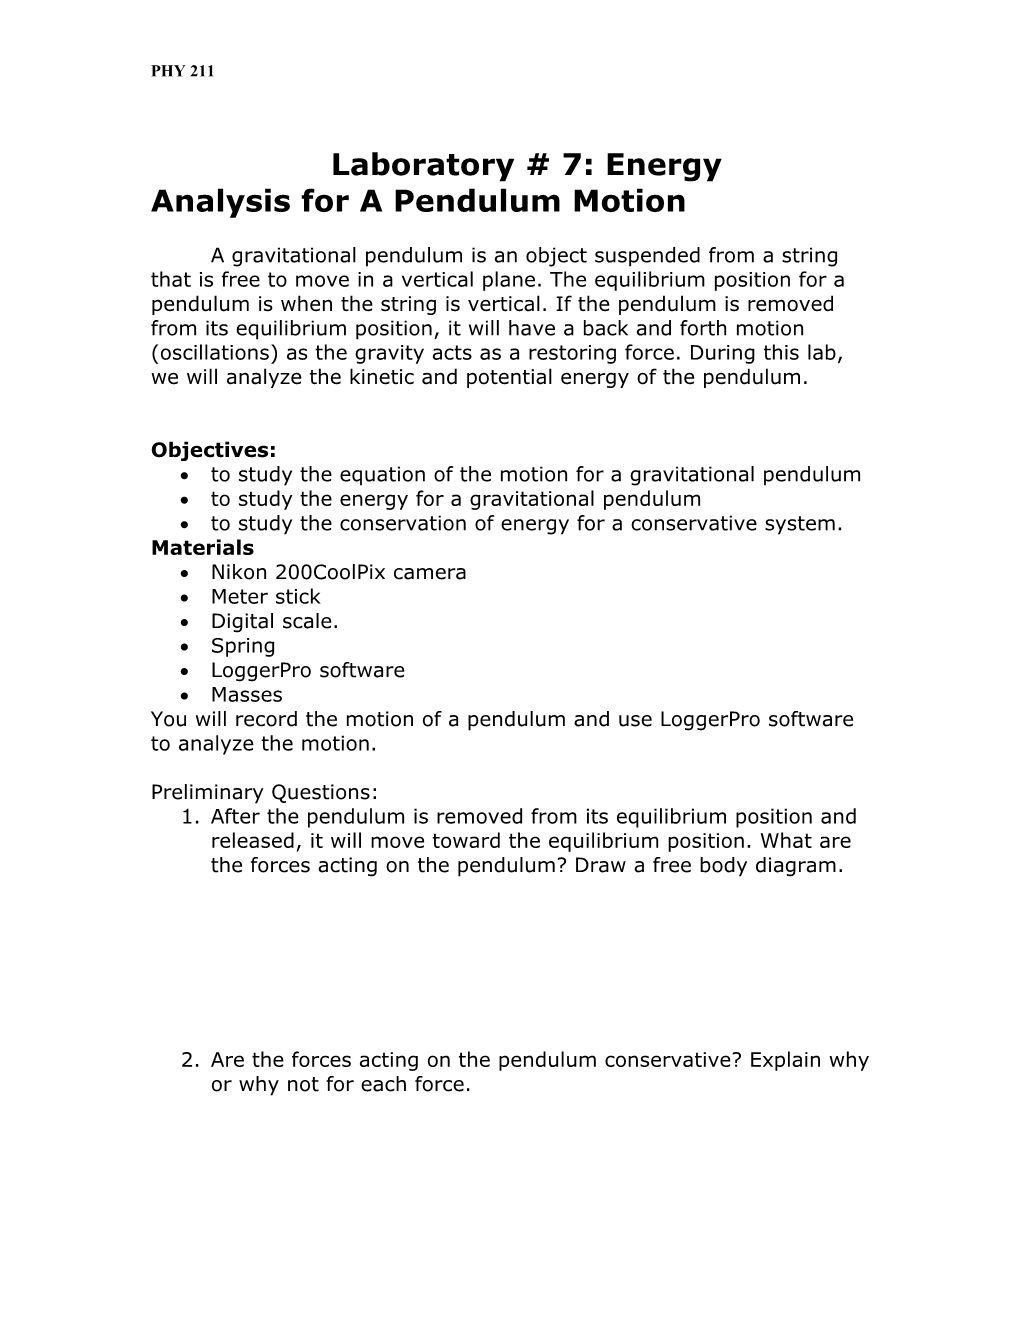 Laboratory # 7: Energy Analysis for a Pendulum Motion